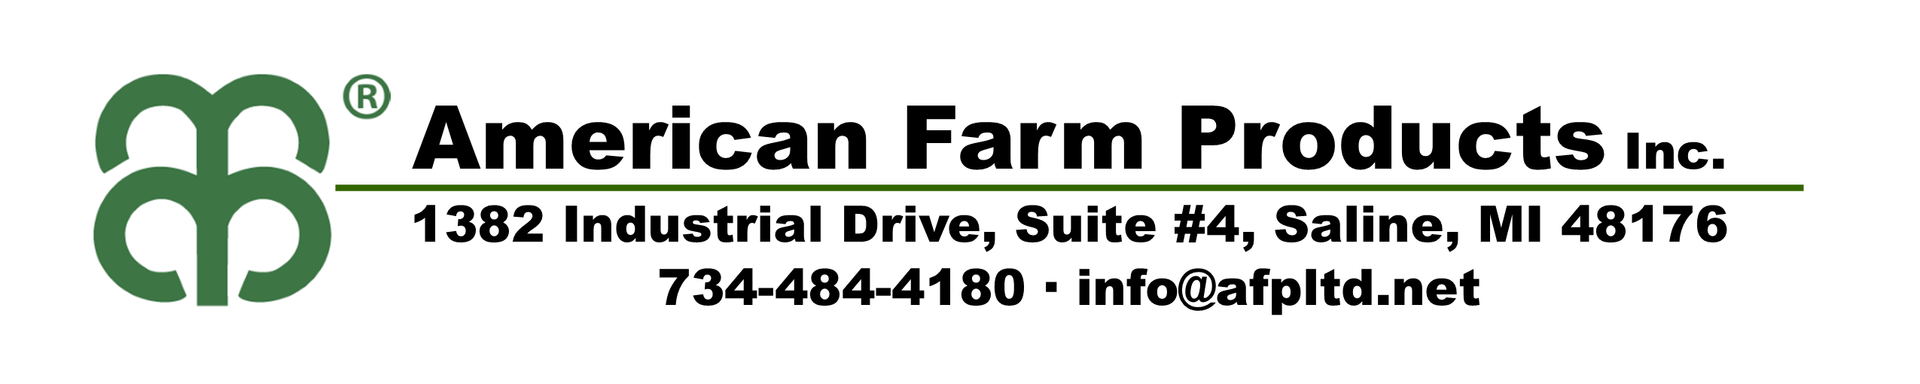 American Farm Products Inc.